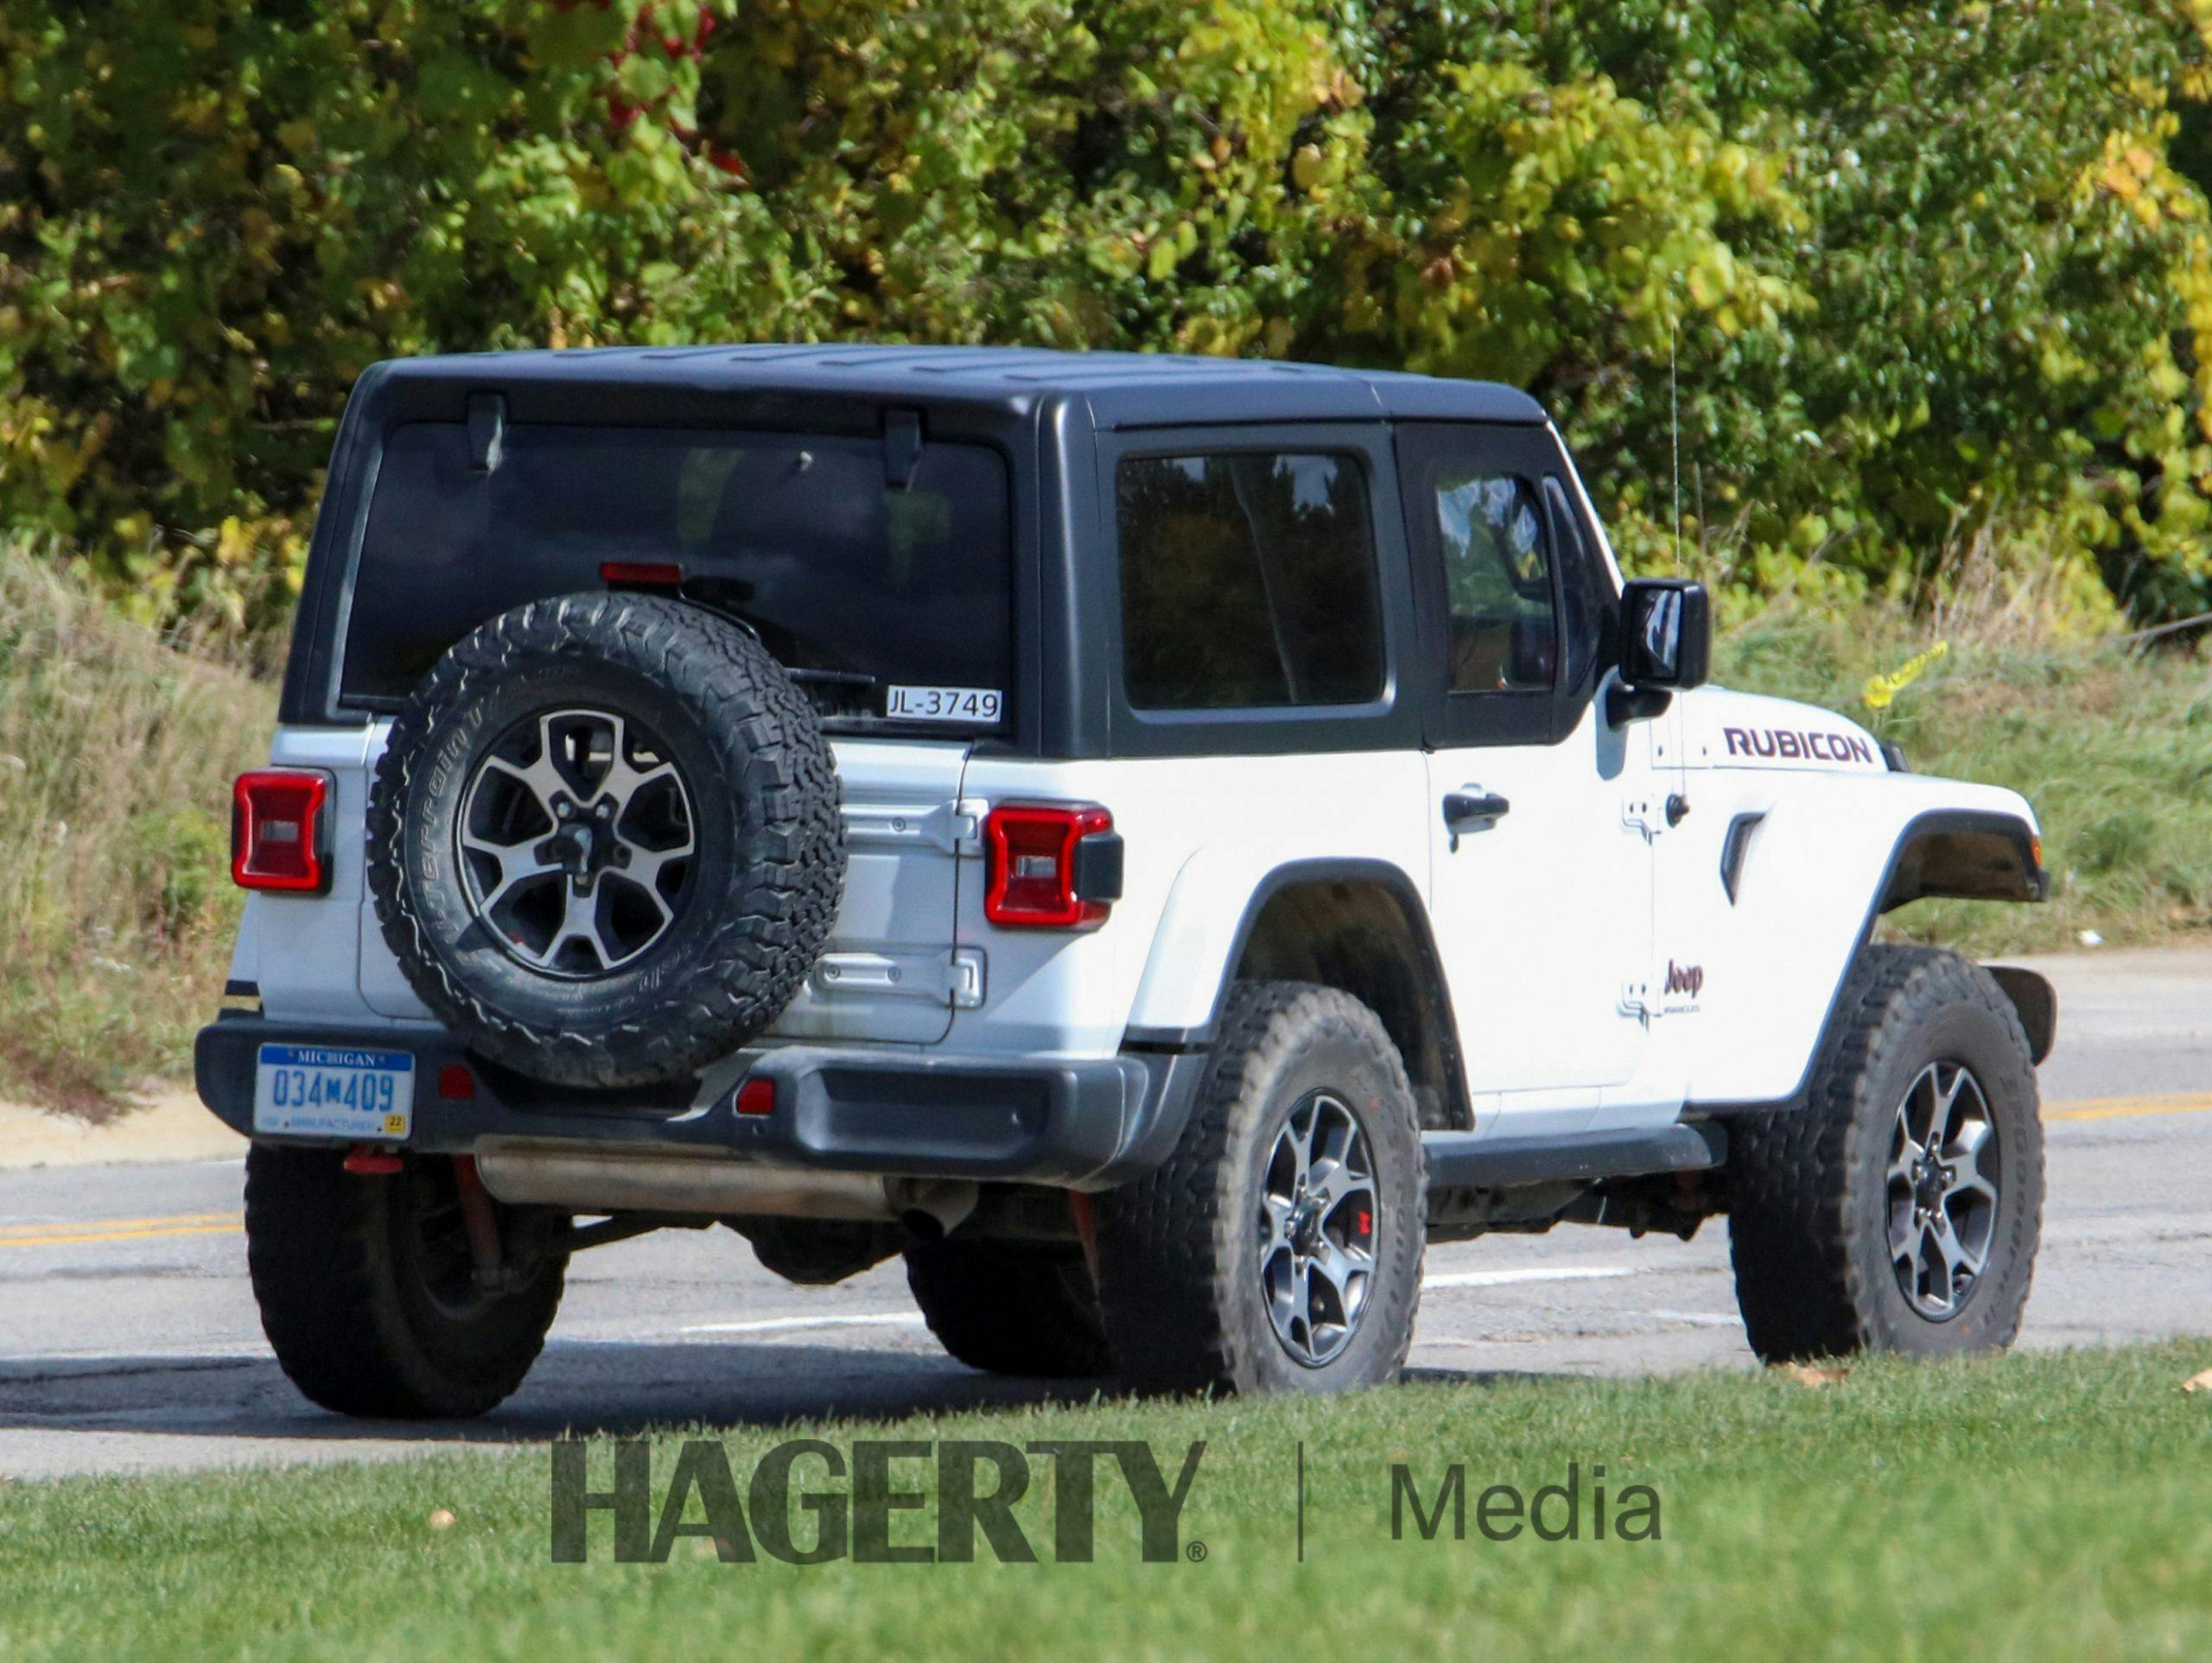 Jeep Wrangler half-door revealed testing in plain sight - Hagerty Media